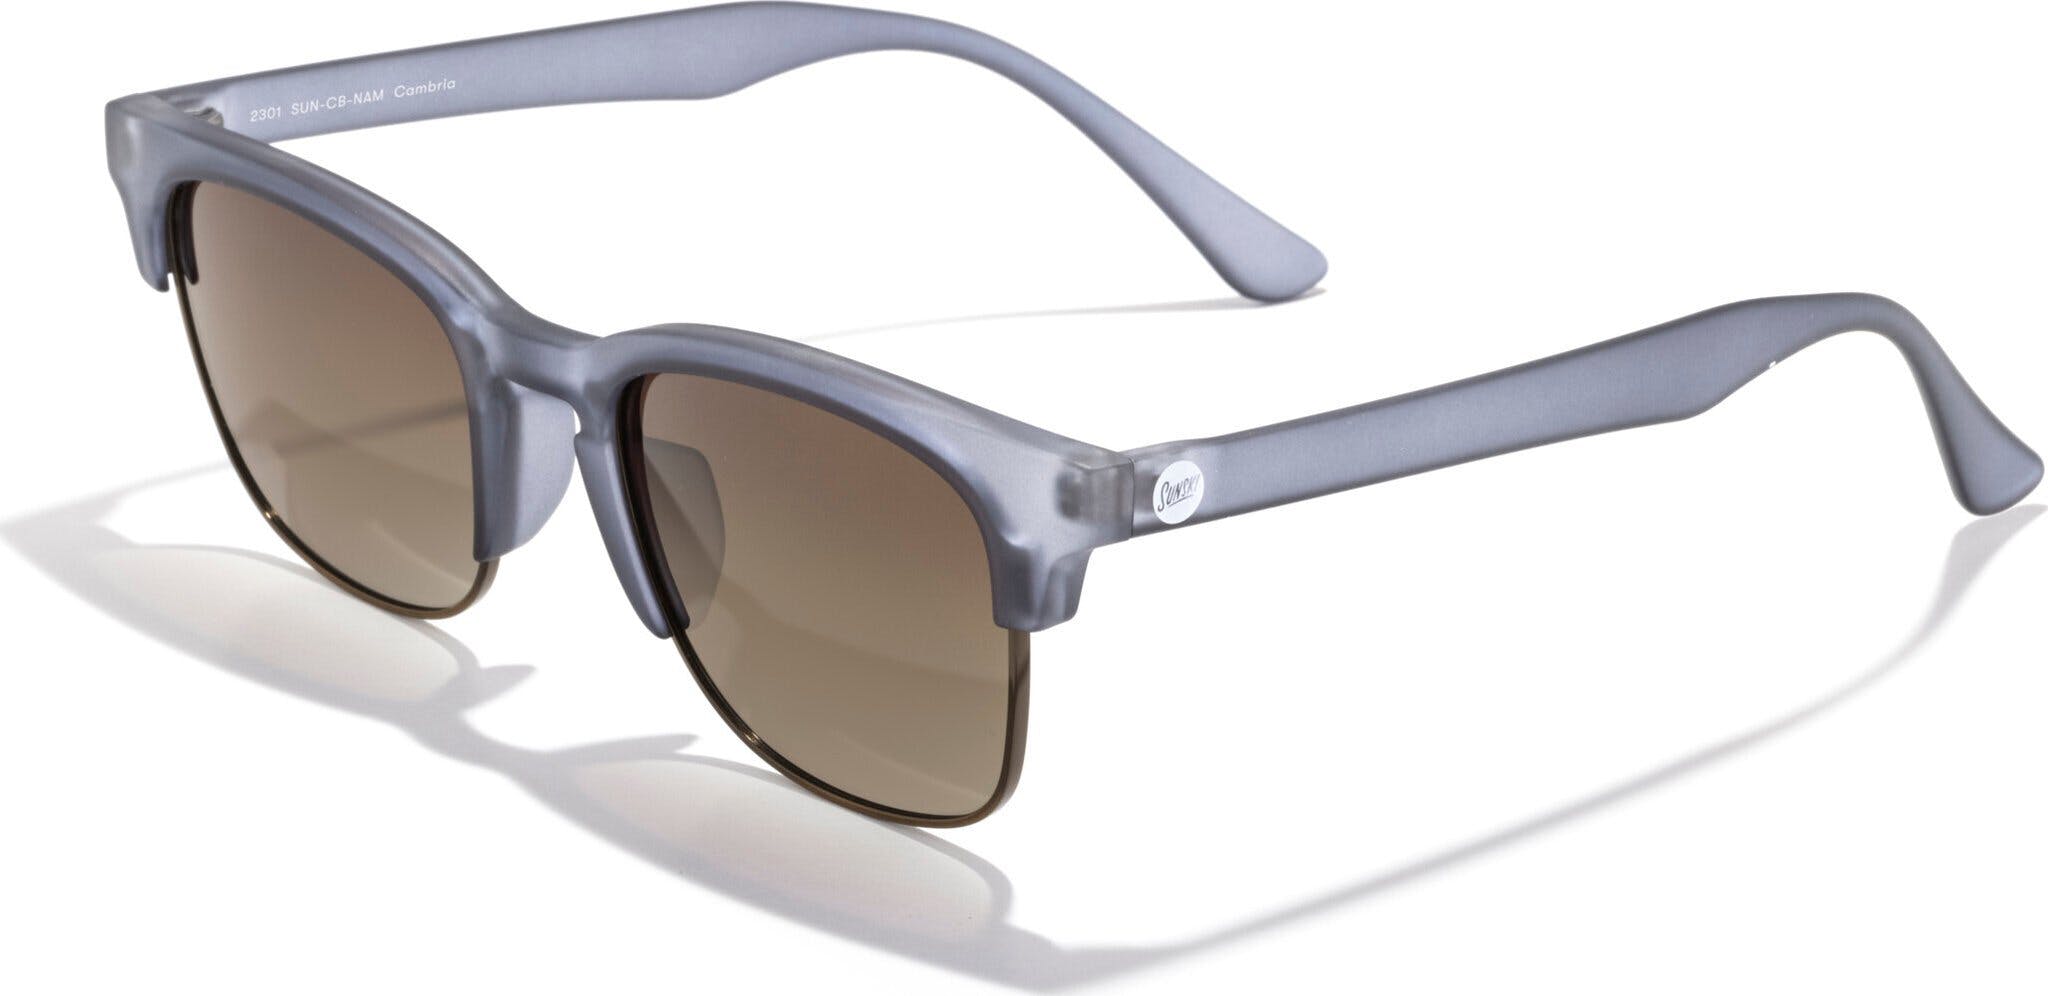 Product image for Cambria Sunglasses - Unisex